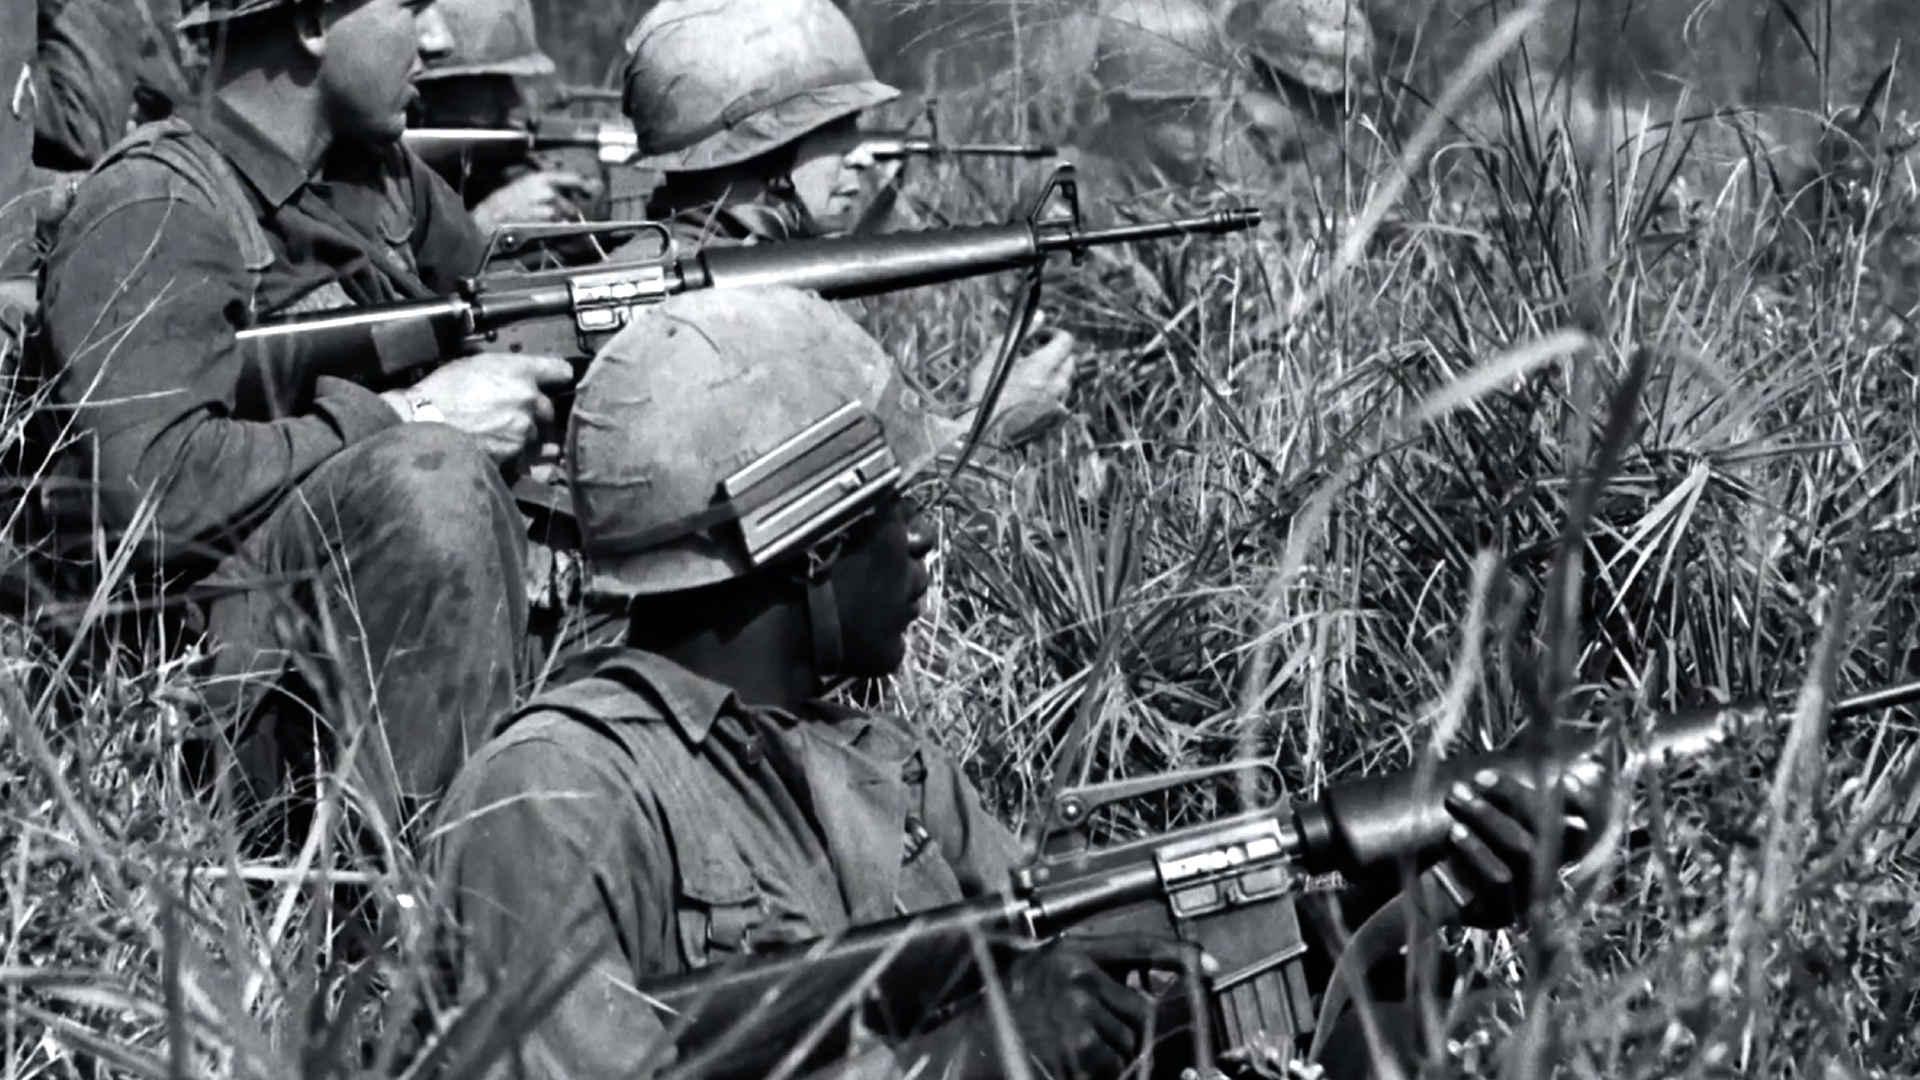 Vietnam War timeline: U.S. involvement over decades